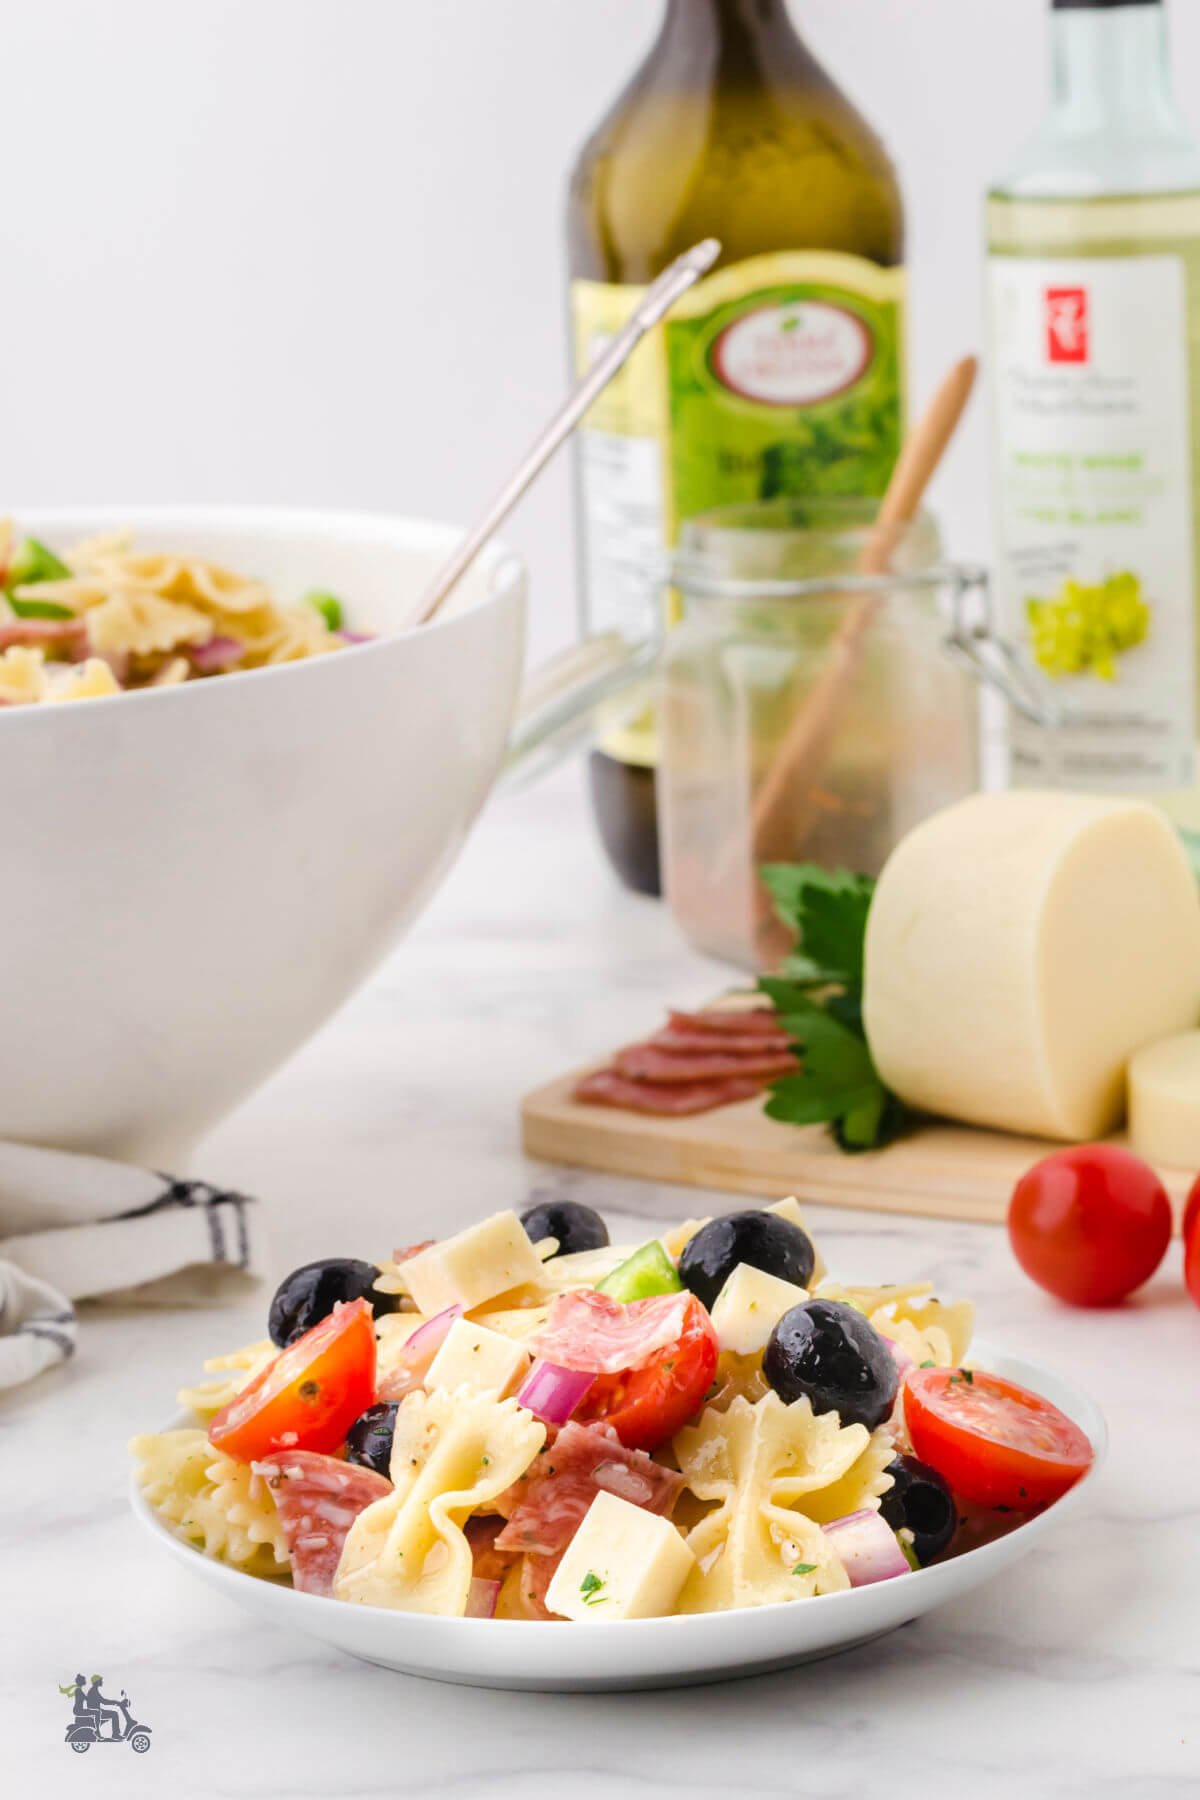 Farfalle pasta made into an Italian pasta salad with homemade Italian salad dressing. 